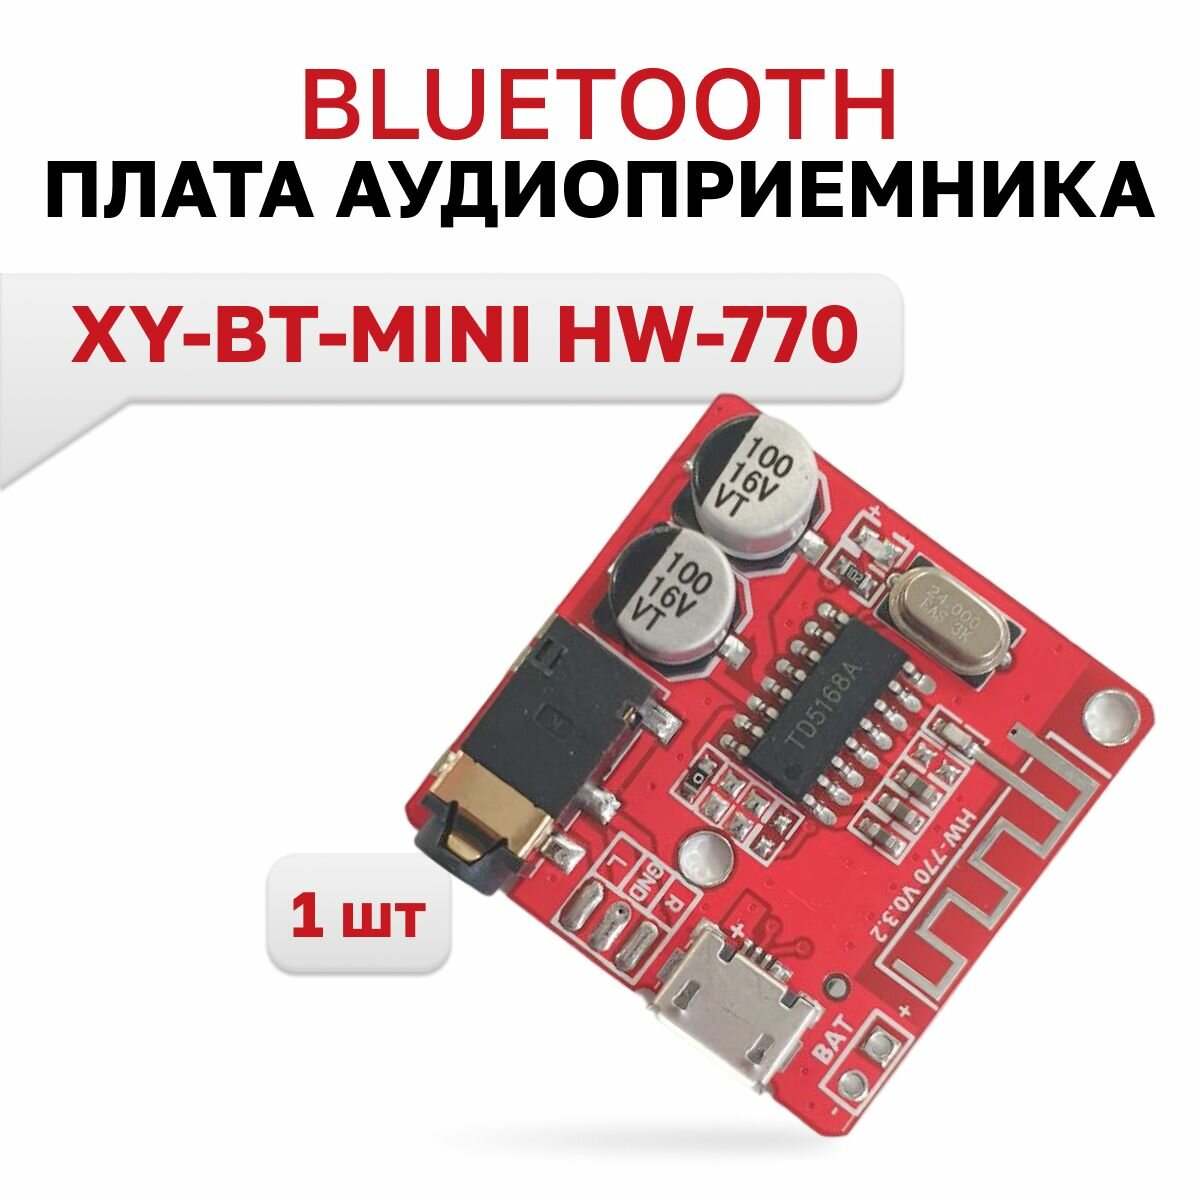 Модуль MP3 Bluetooth (XY-BT-MINI HW-770), Bluetooth приемник, декодер, 1 шт.